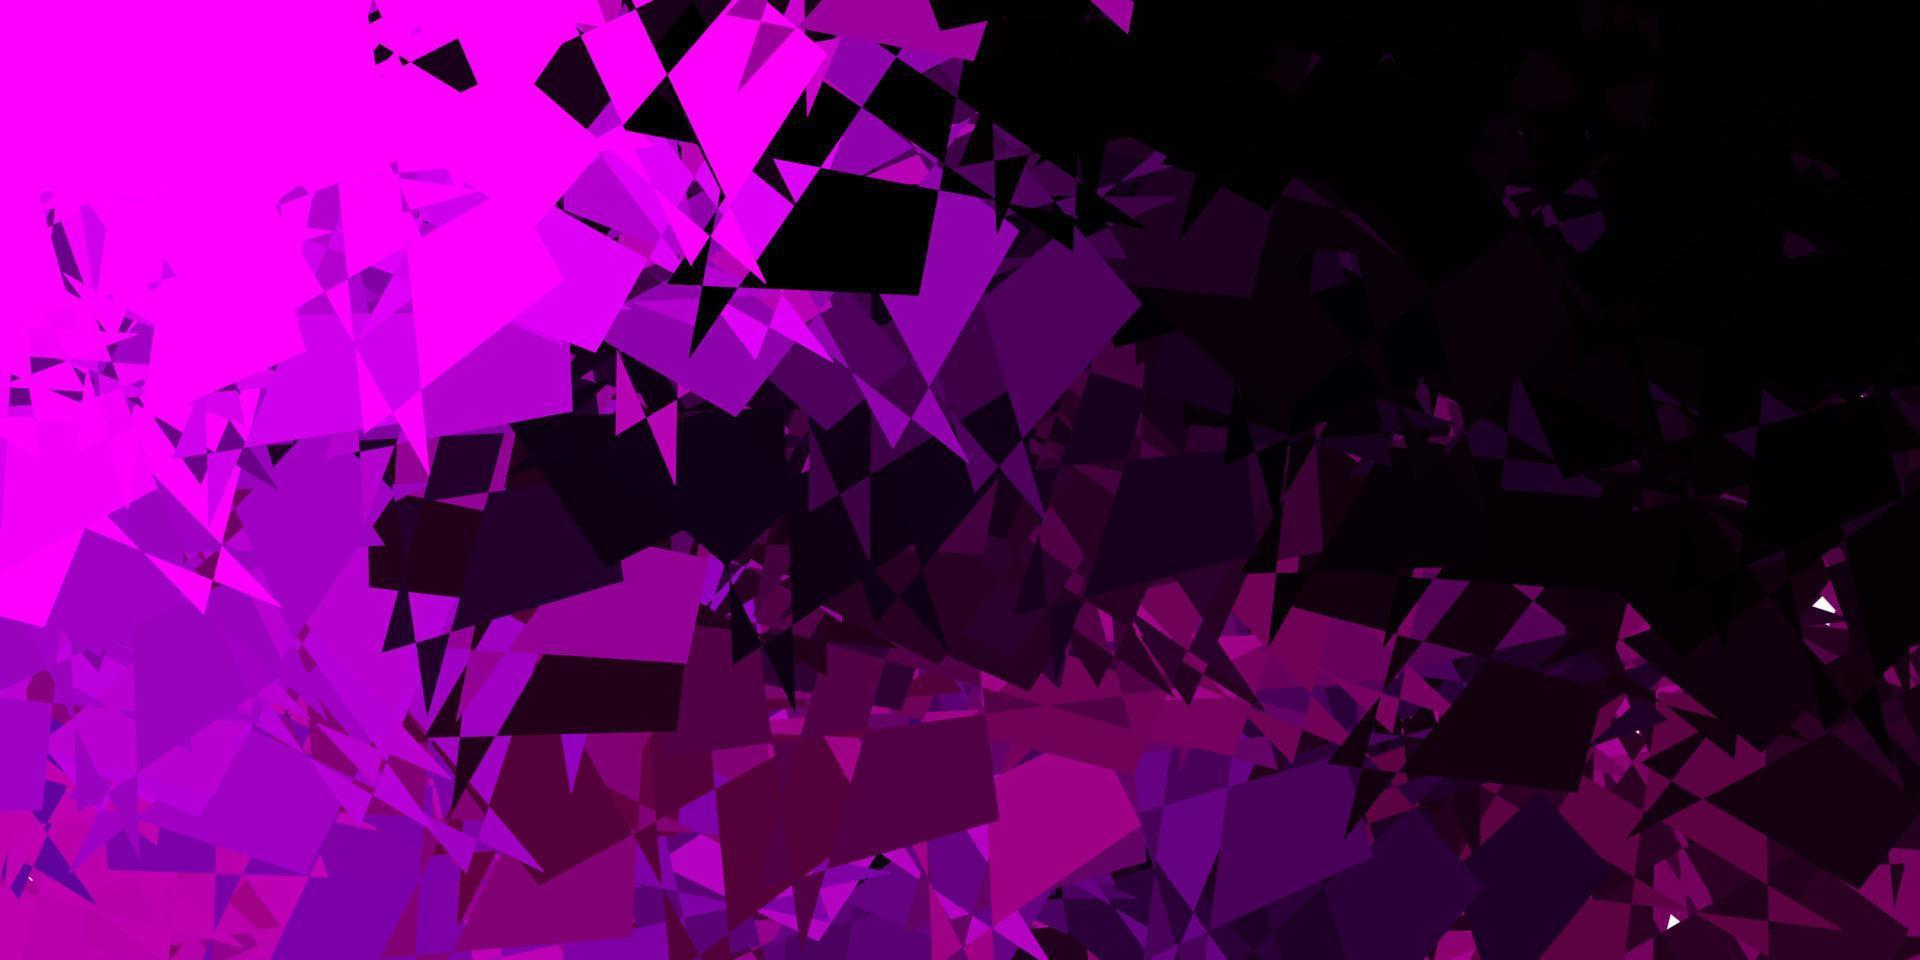 Dark pink vector background with random forms.